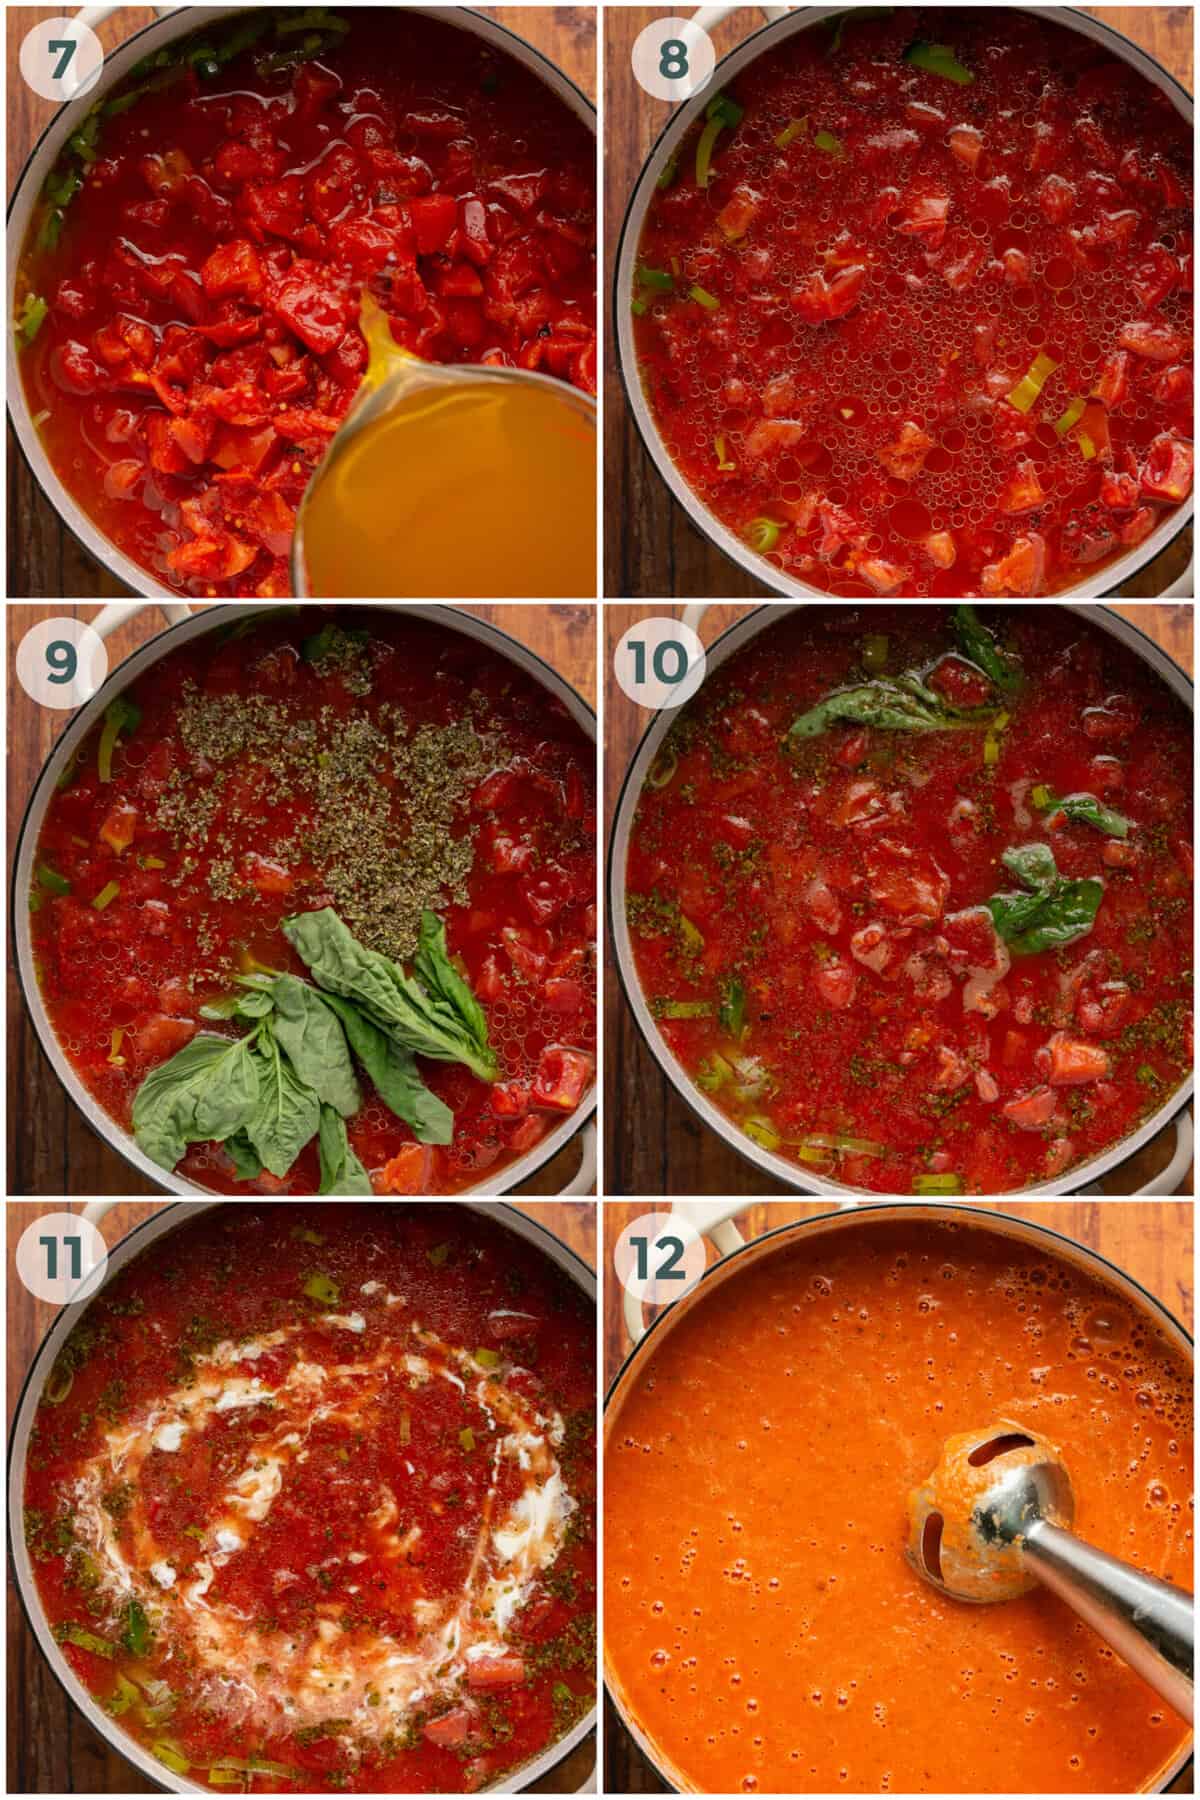 steps 7-12 of tomato soup recipe